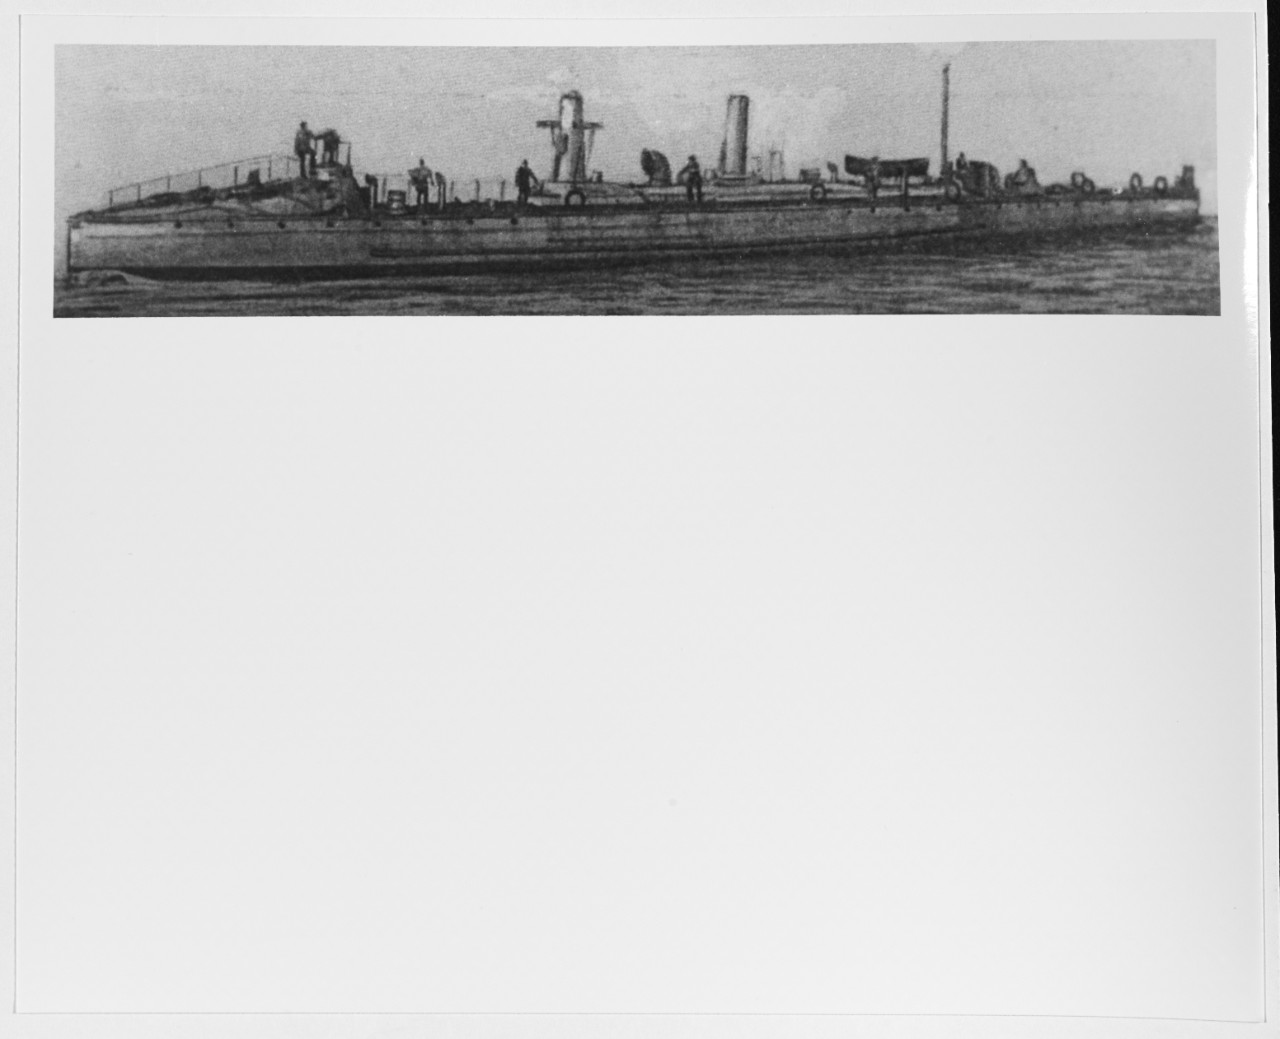 LASTOCHKA (Russian Torpedo Boat, 1904)